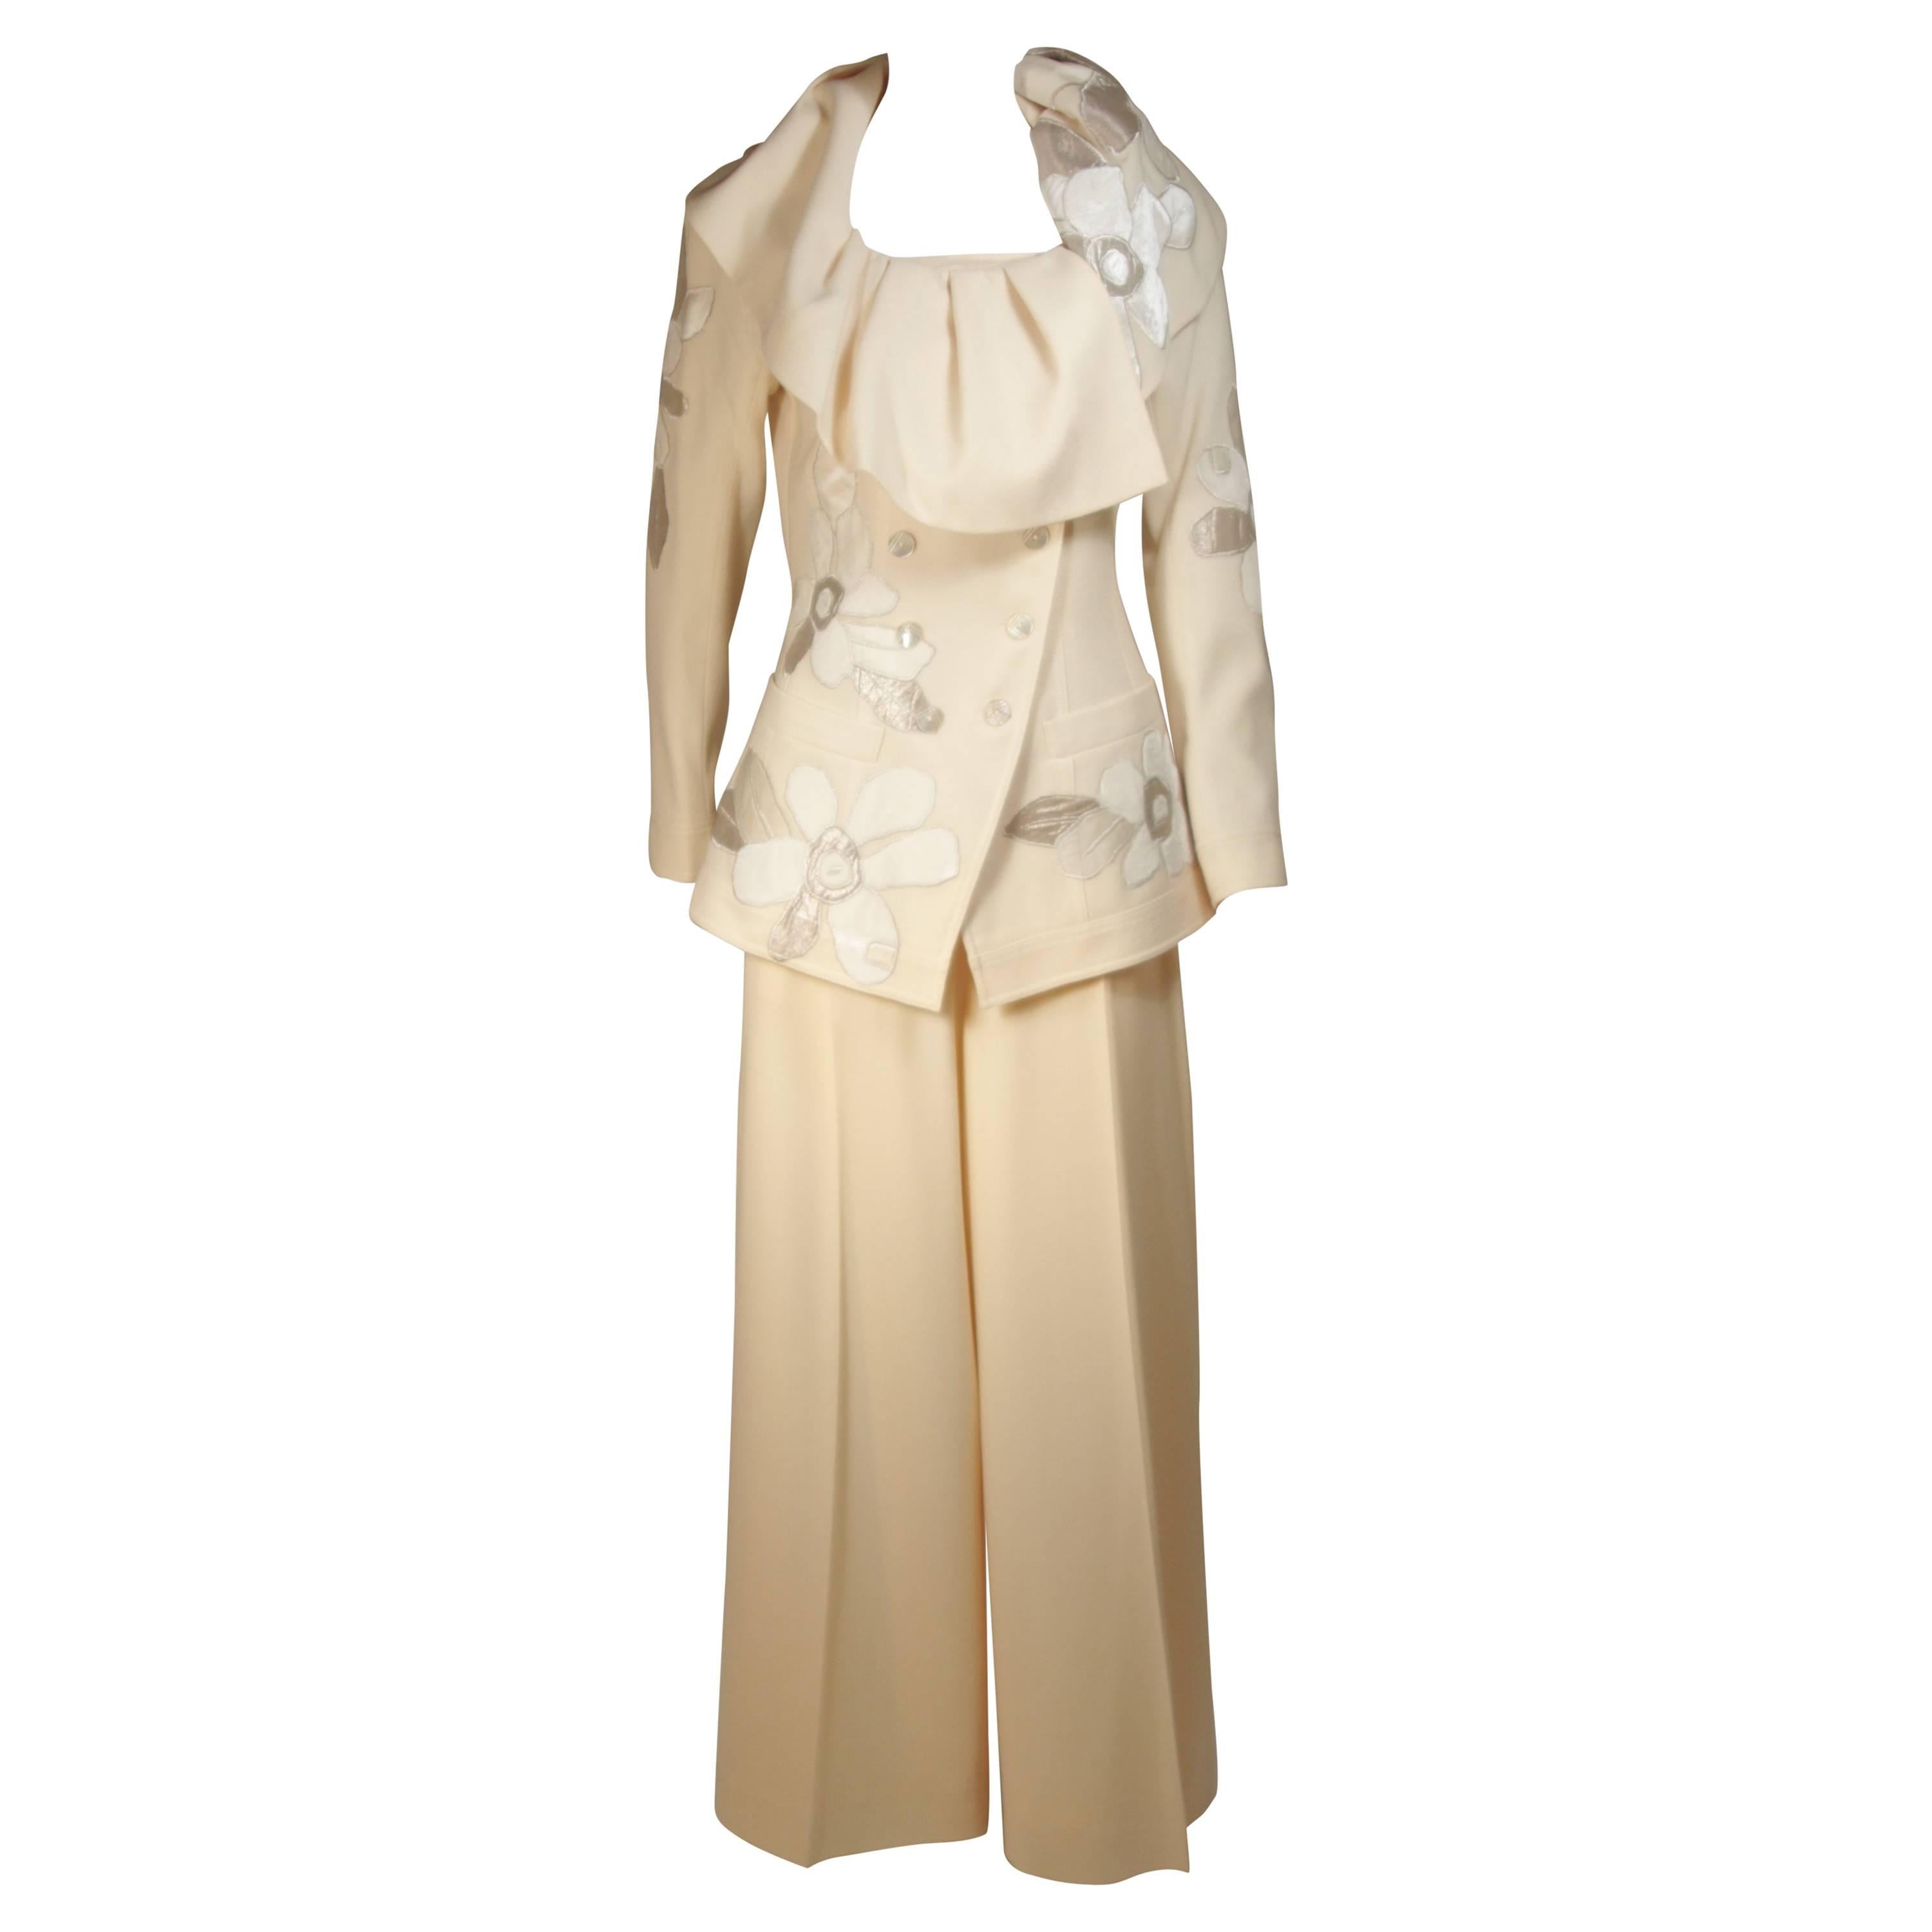 JOHN GALLIANO Ivory Silk Pant Suit with Metallic Applique Size 44 42